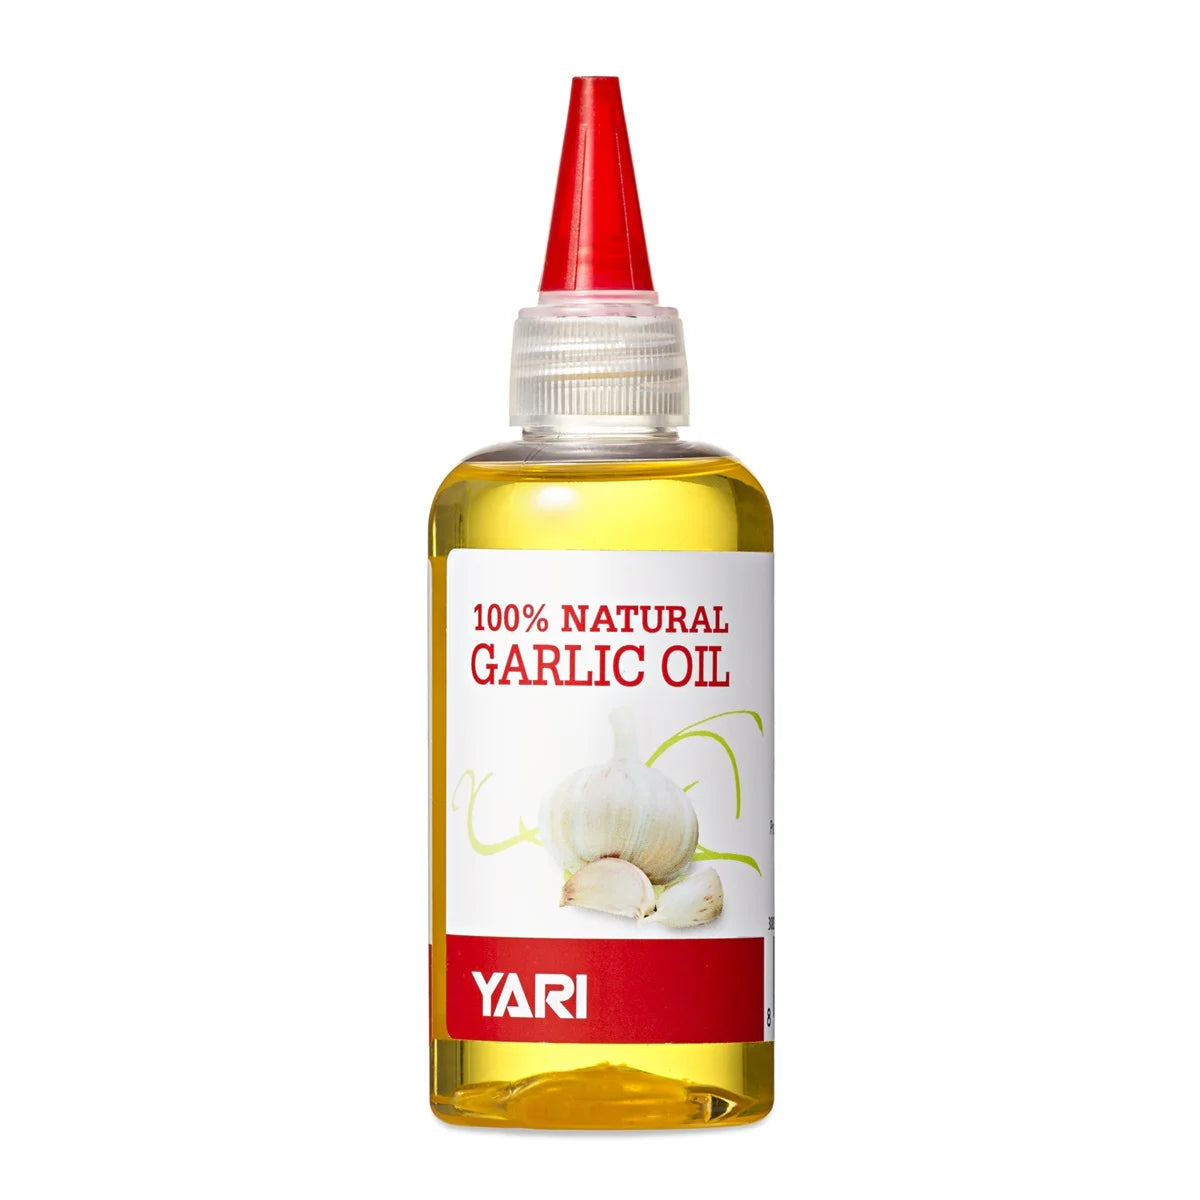 Yari 100% Natural Garlic Oil 105ml